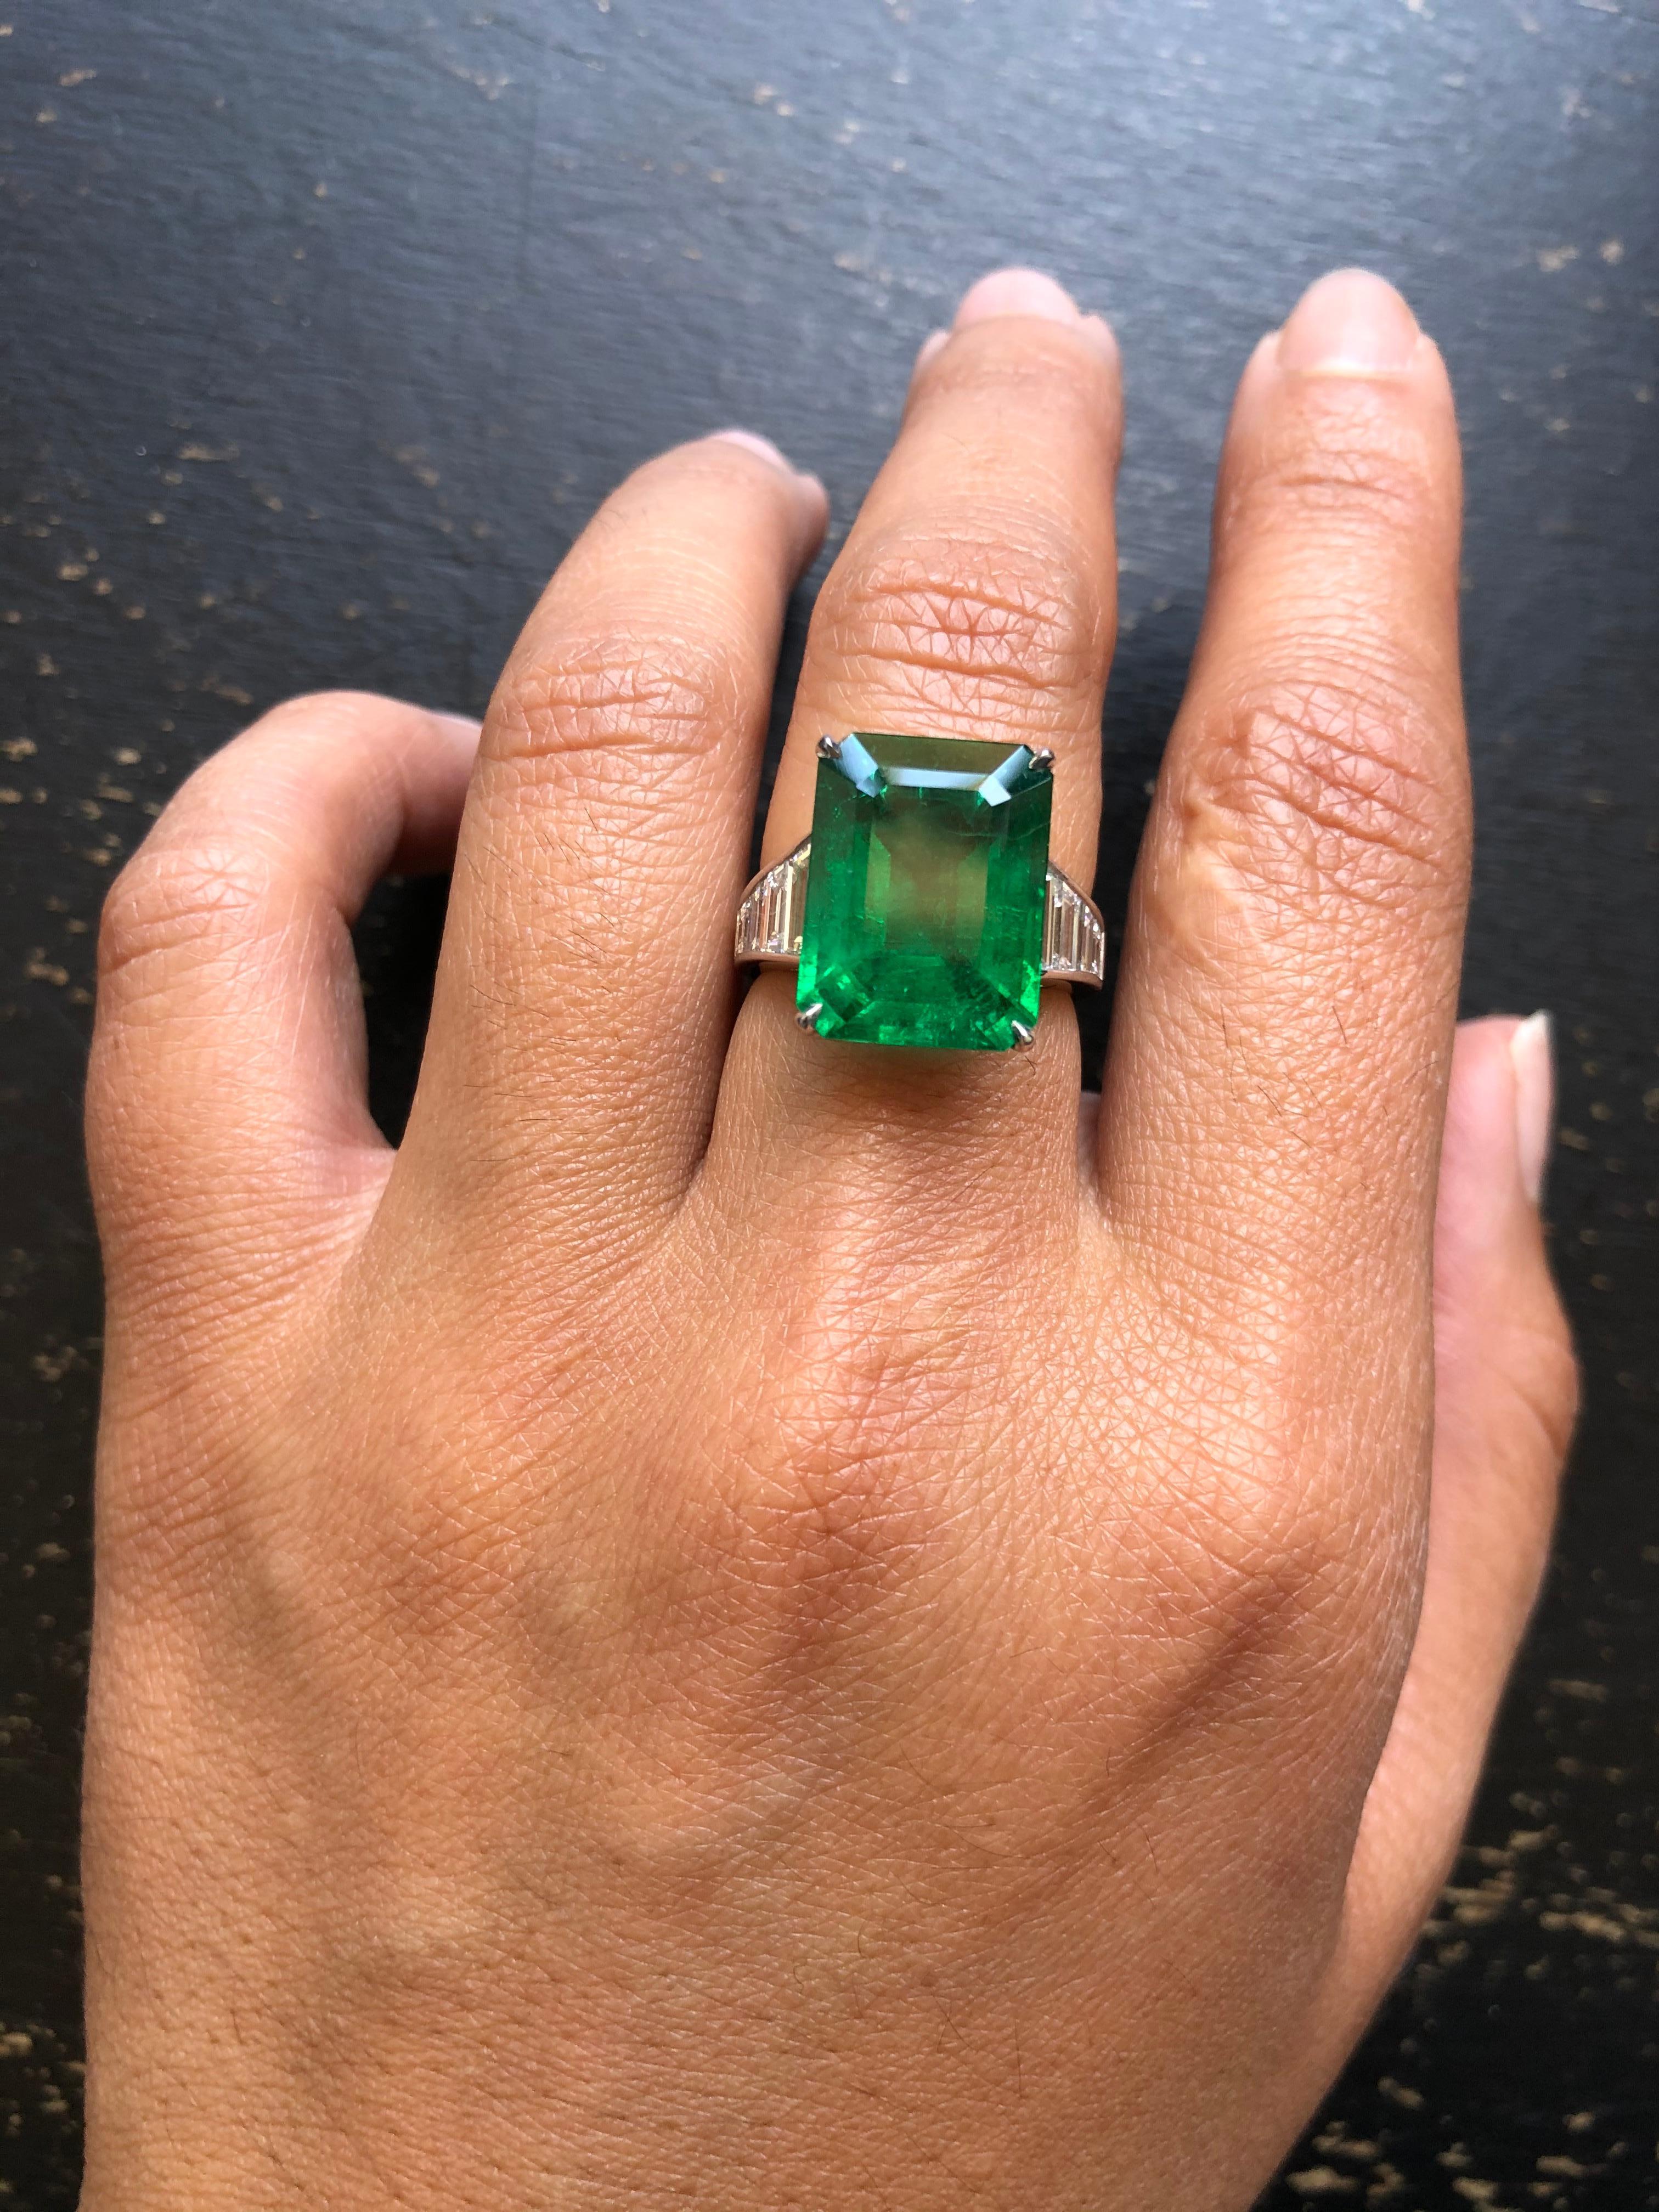 Emerald Cut Emerald and Diamond Ring 1